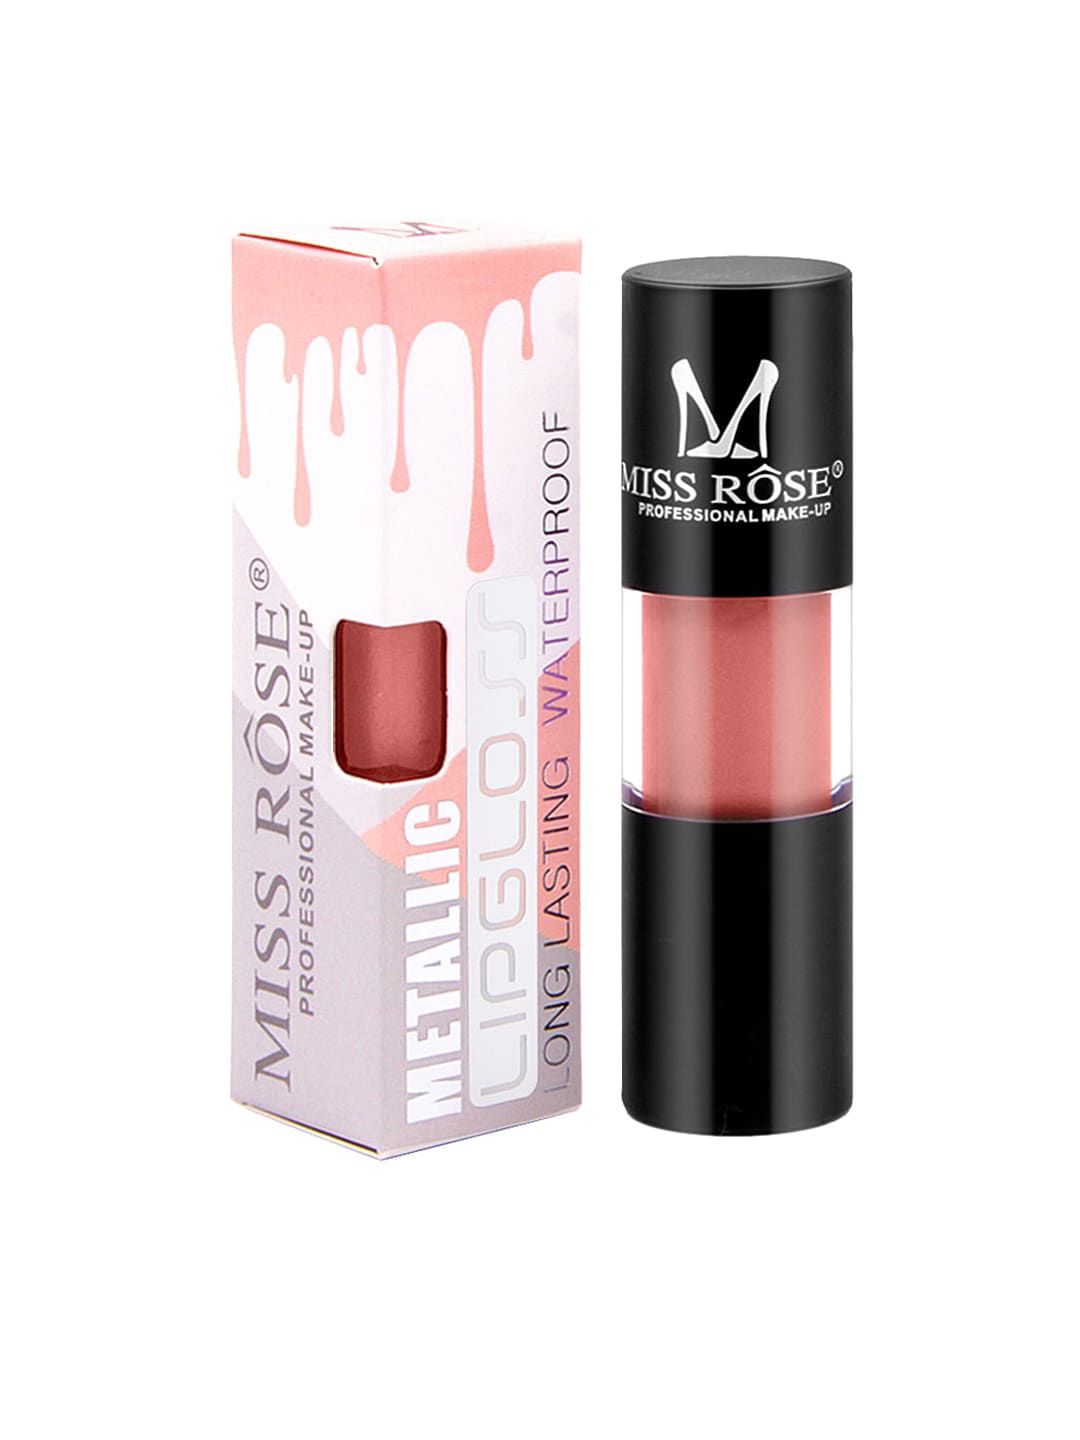 MISS ROSE Metallic Liquid LipGloss Peach 32 - 20 g Price in India